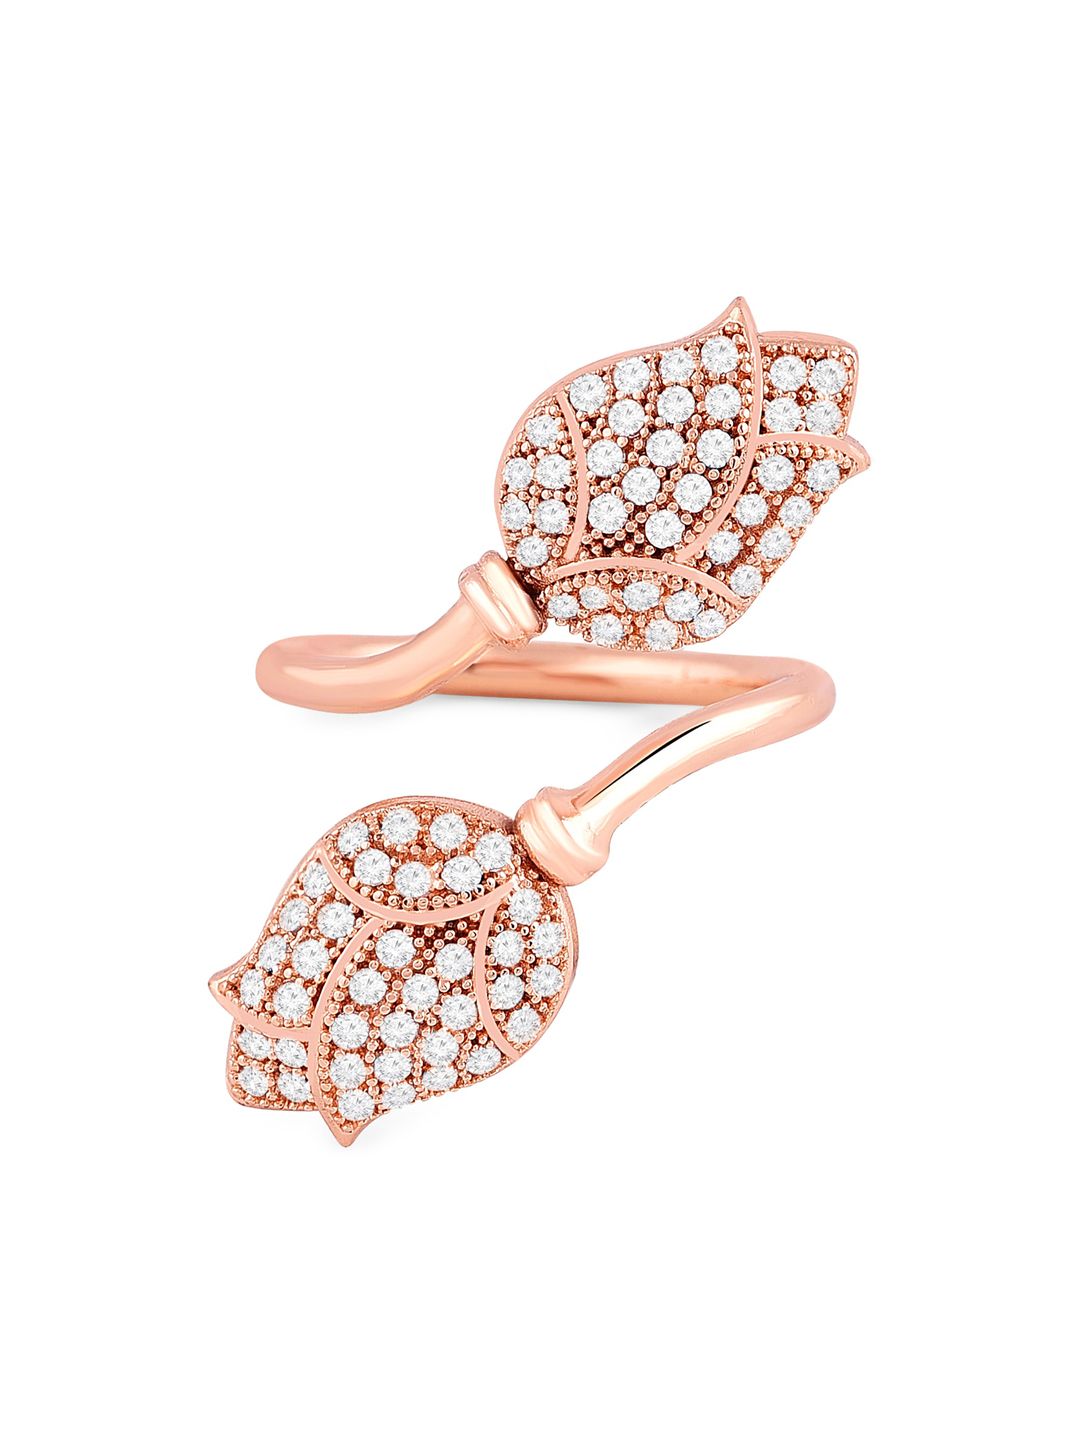 Zaveri Pearls Rose Gold-Plated & White CZ-Studded Tulip Flower Design Adjustable Finger Ring Price in India